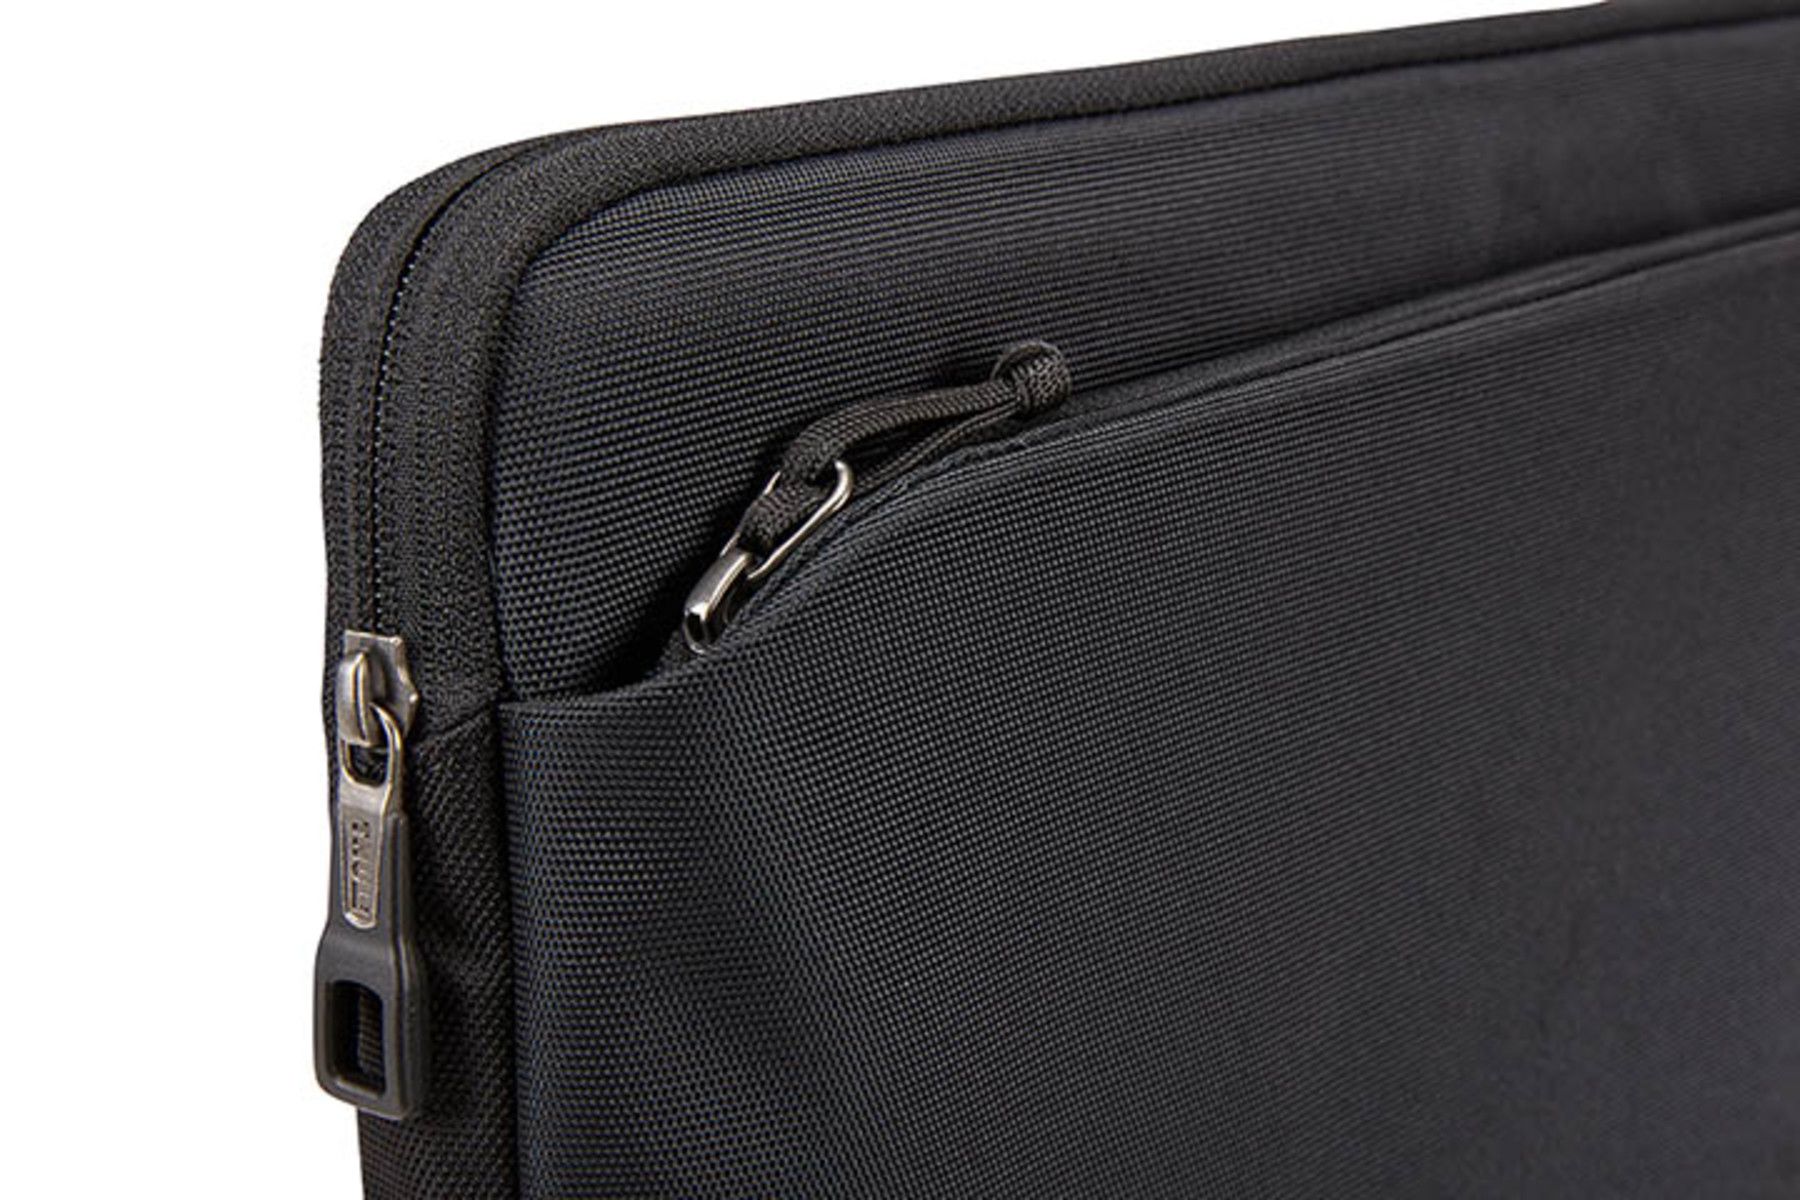 HUSA THULE  notebook 13 inch, 1 compartiment, buzunar frontal, nylon, negru, 